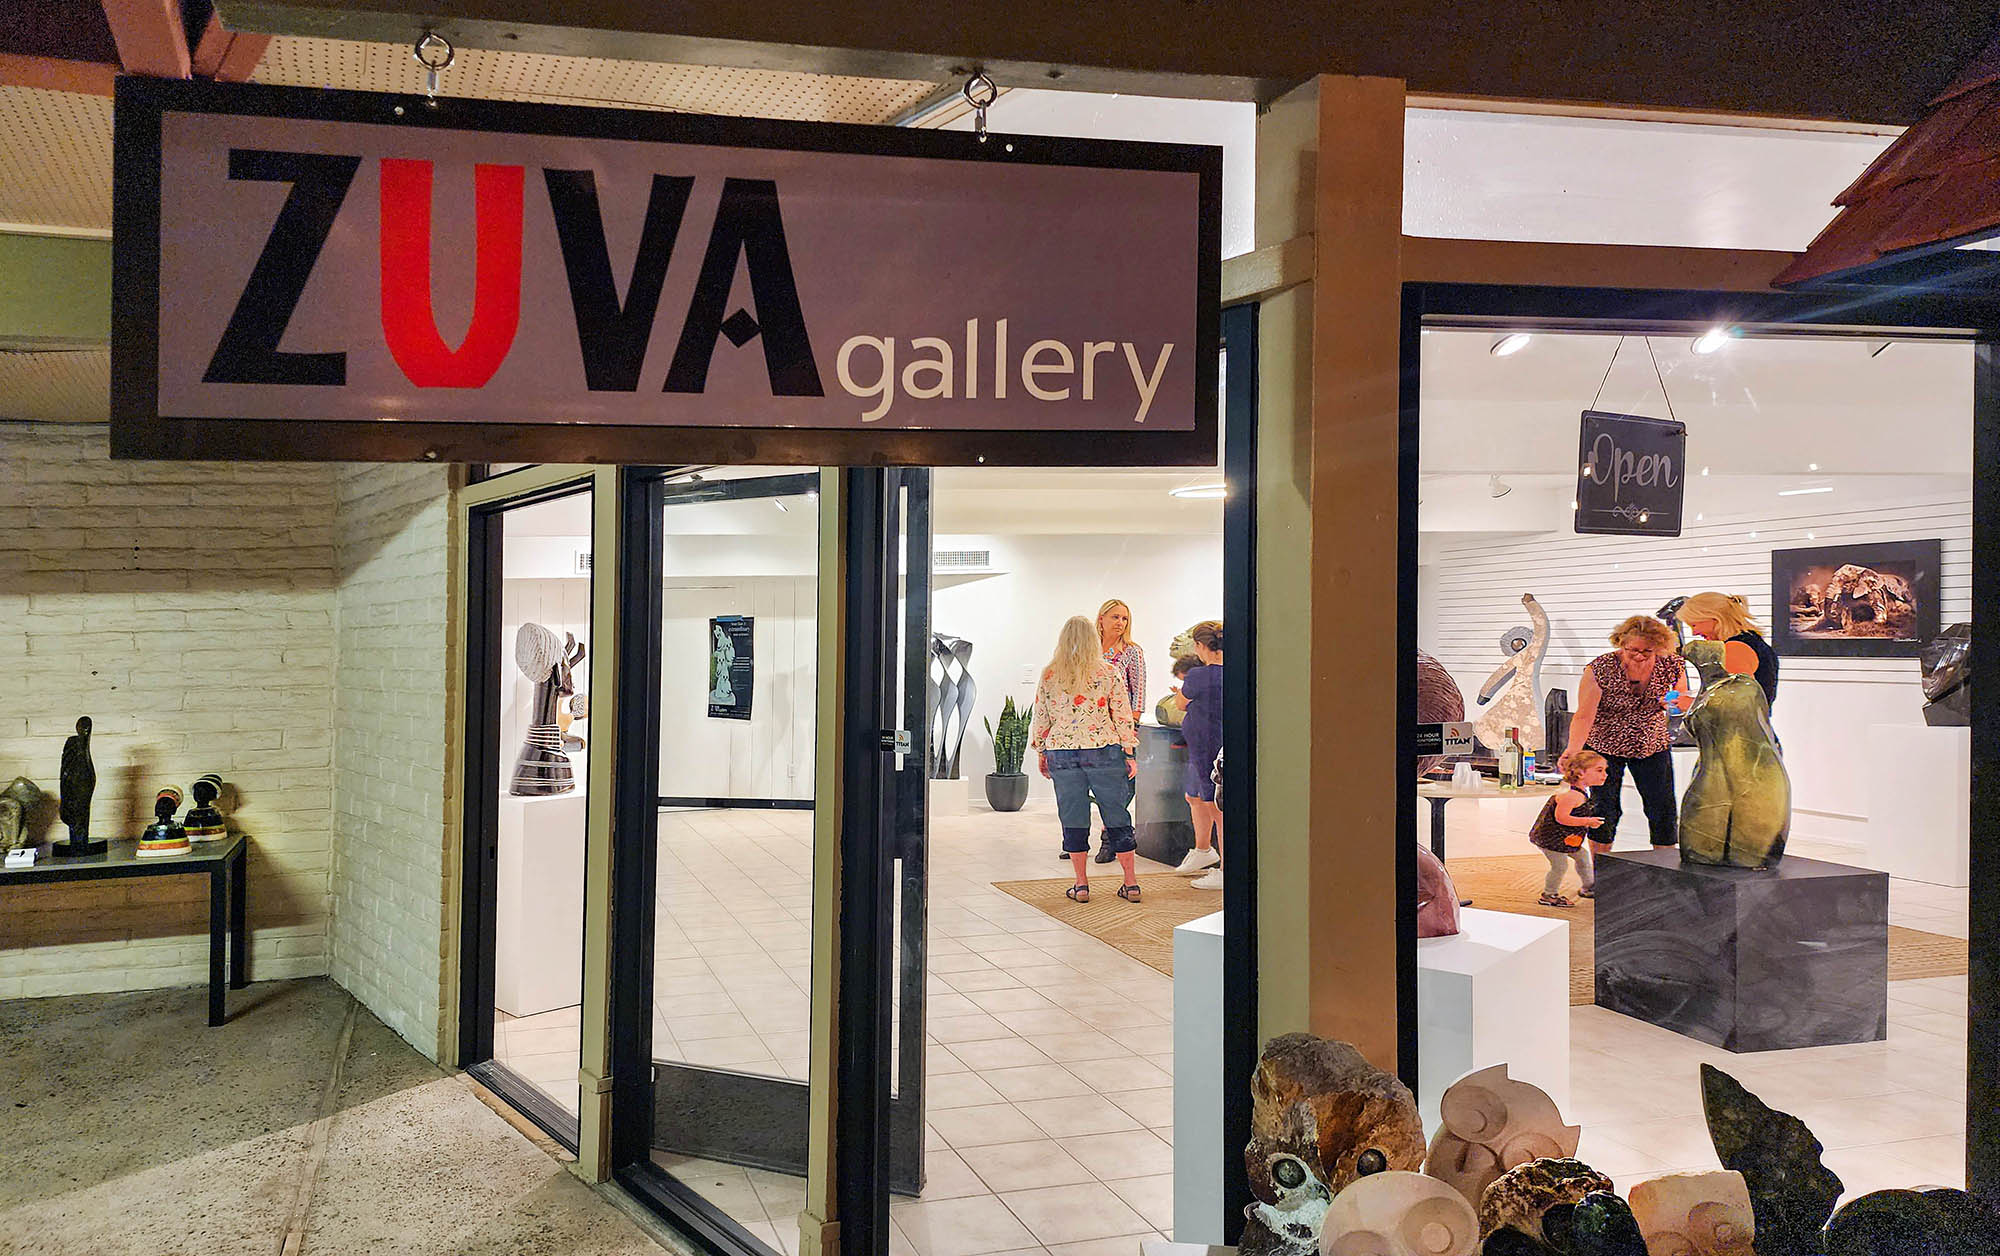 Zuva Gallery during their open house